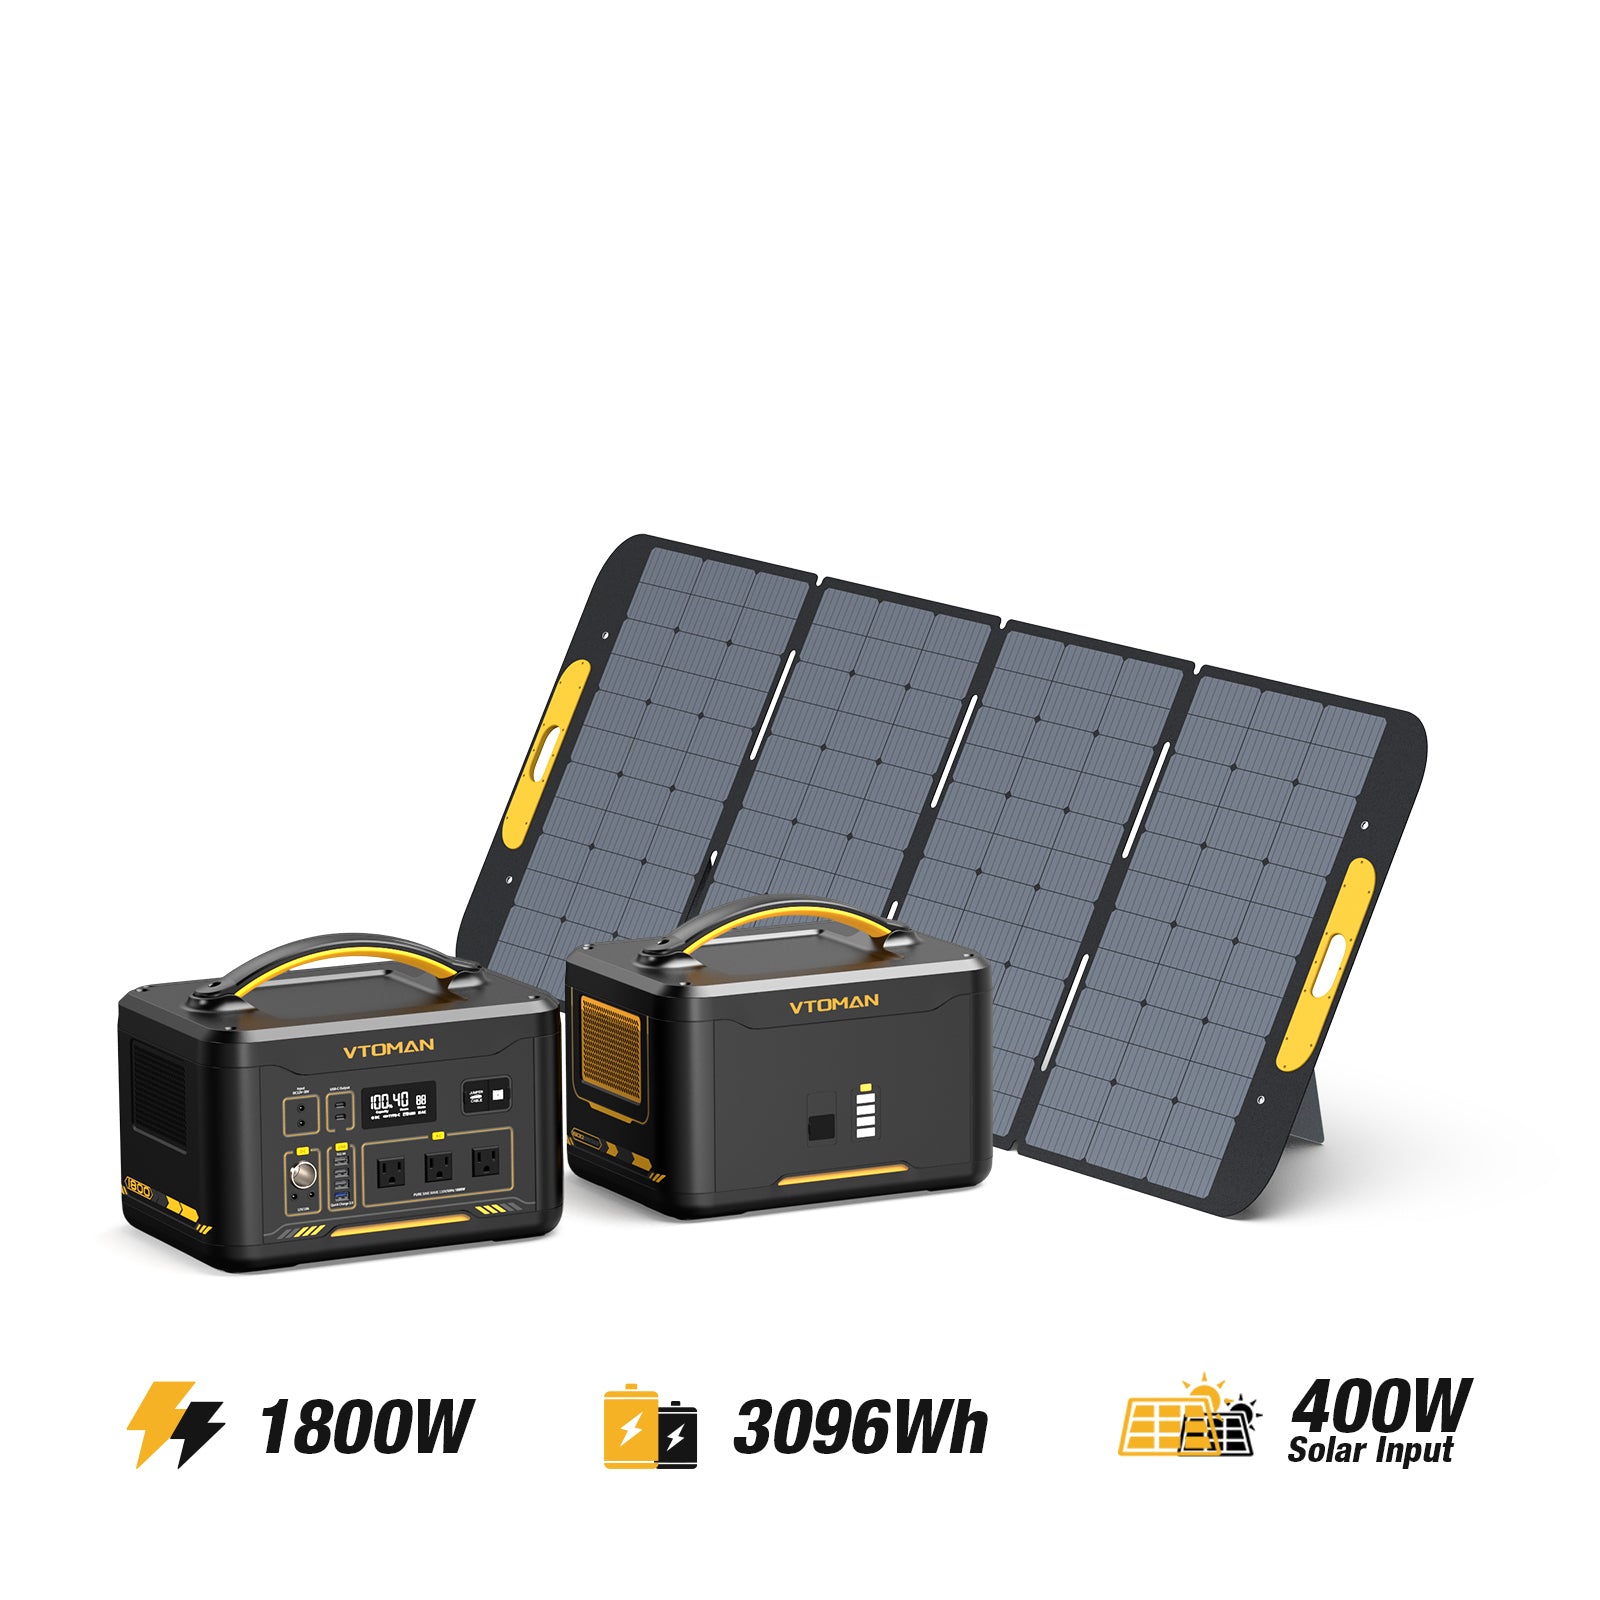 VTOMAN Jump 1800W/3096Wh 400W Solar Generator